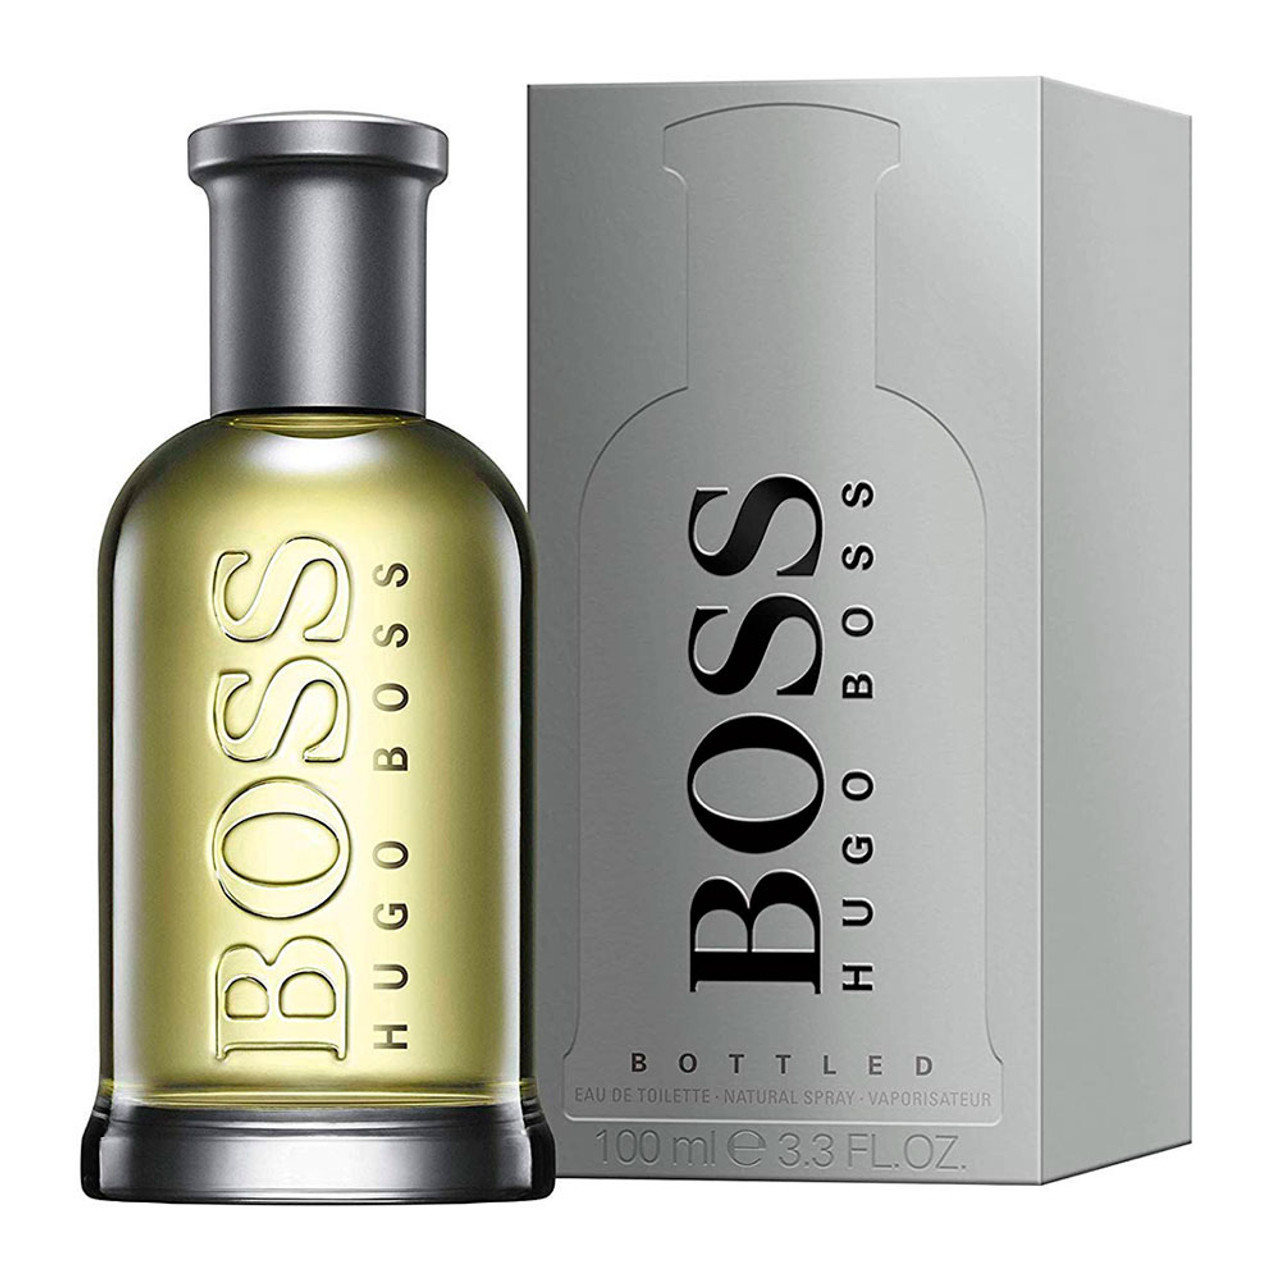 Perfume para Hombre HUGO BOSS MAN 125ml EDT – Cazanovaonline